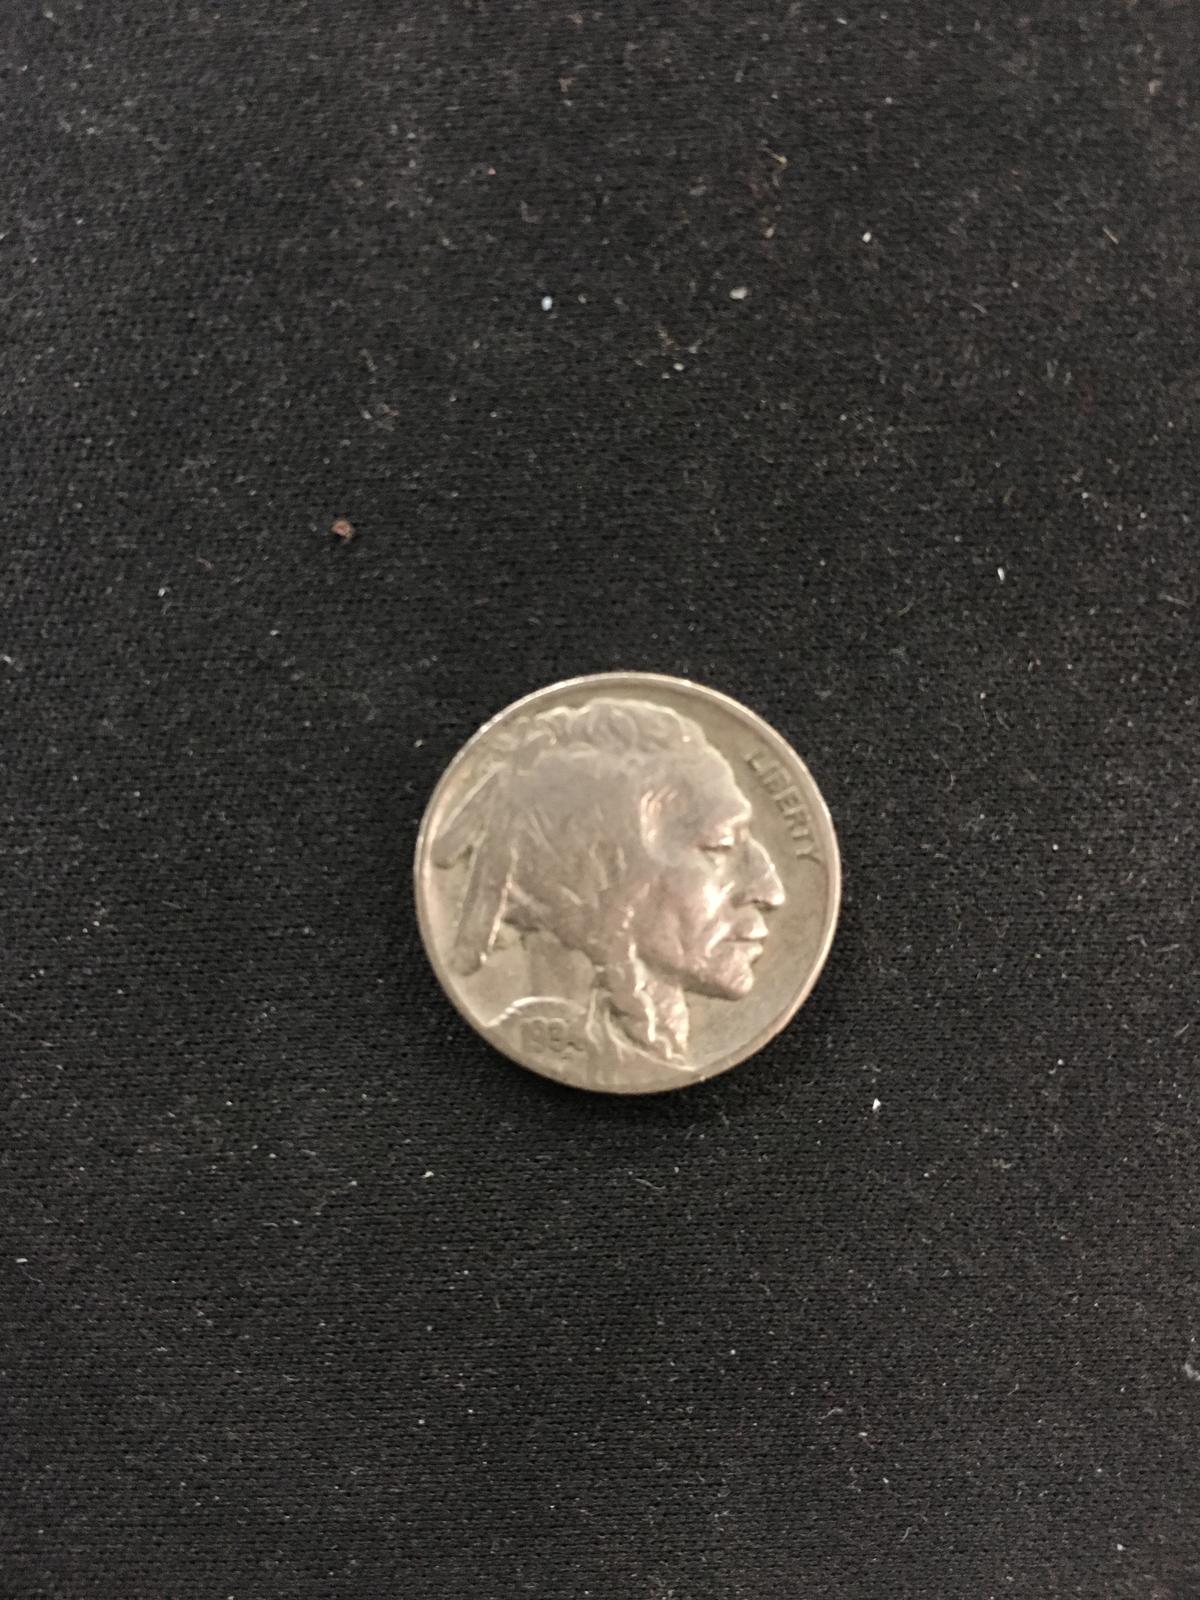 1934-United States Indian Head Buffalo Nickel